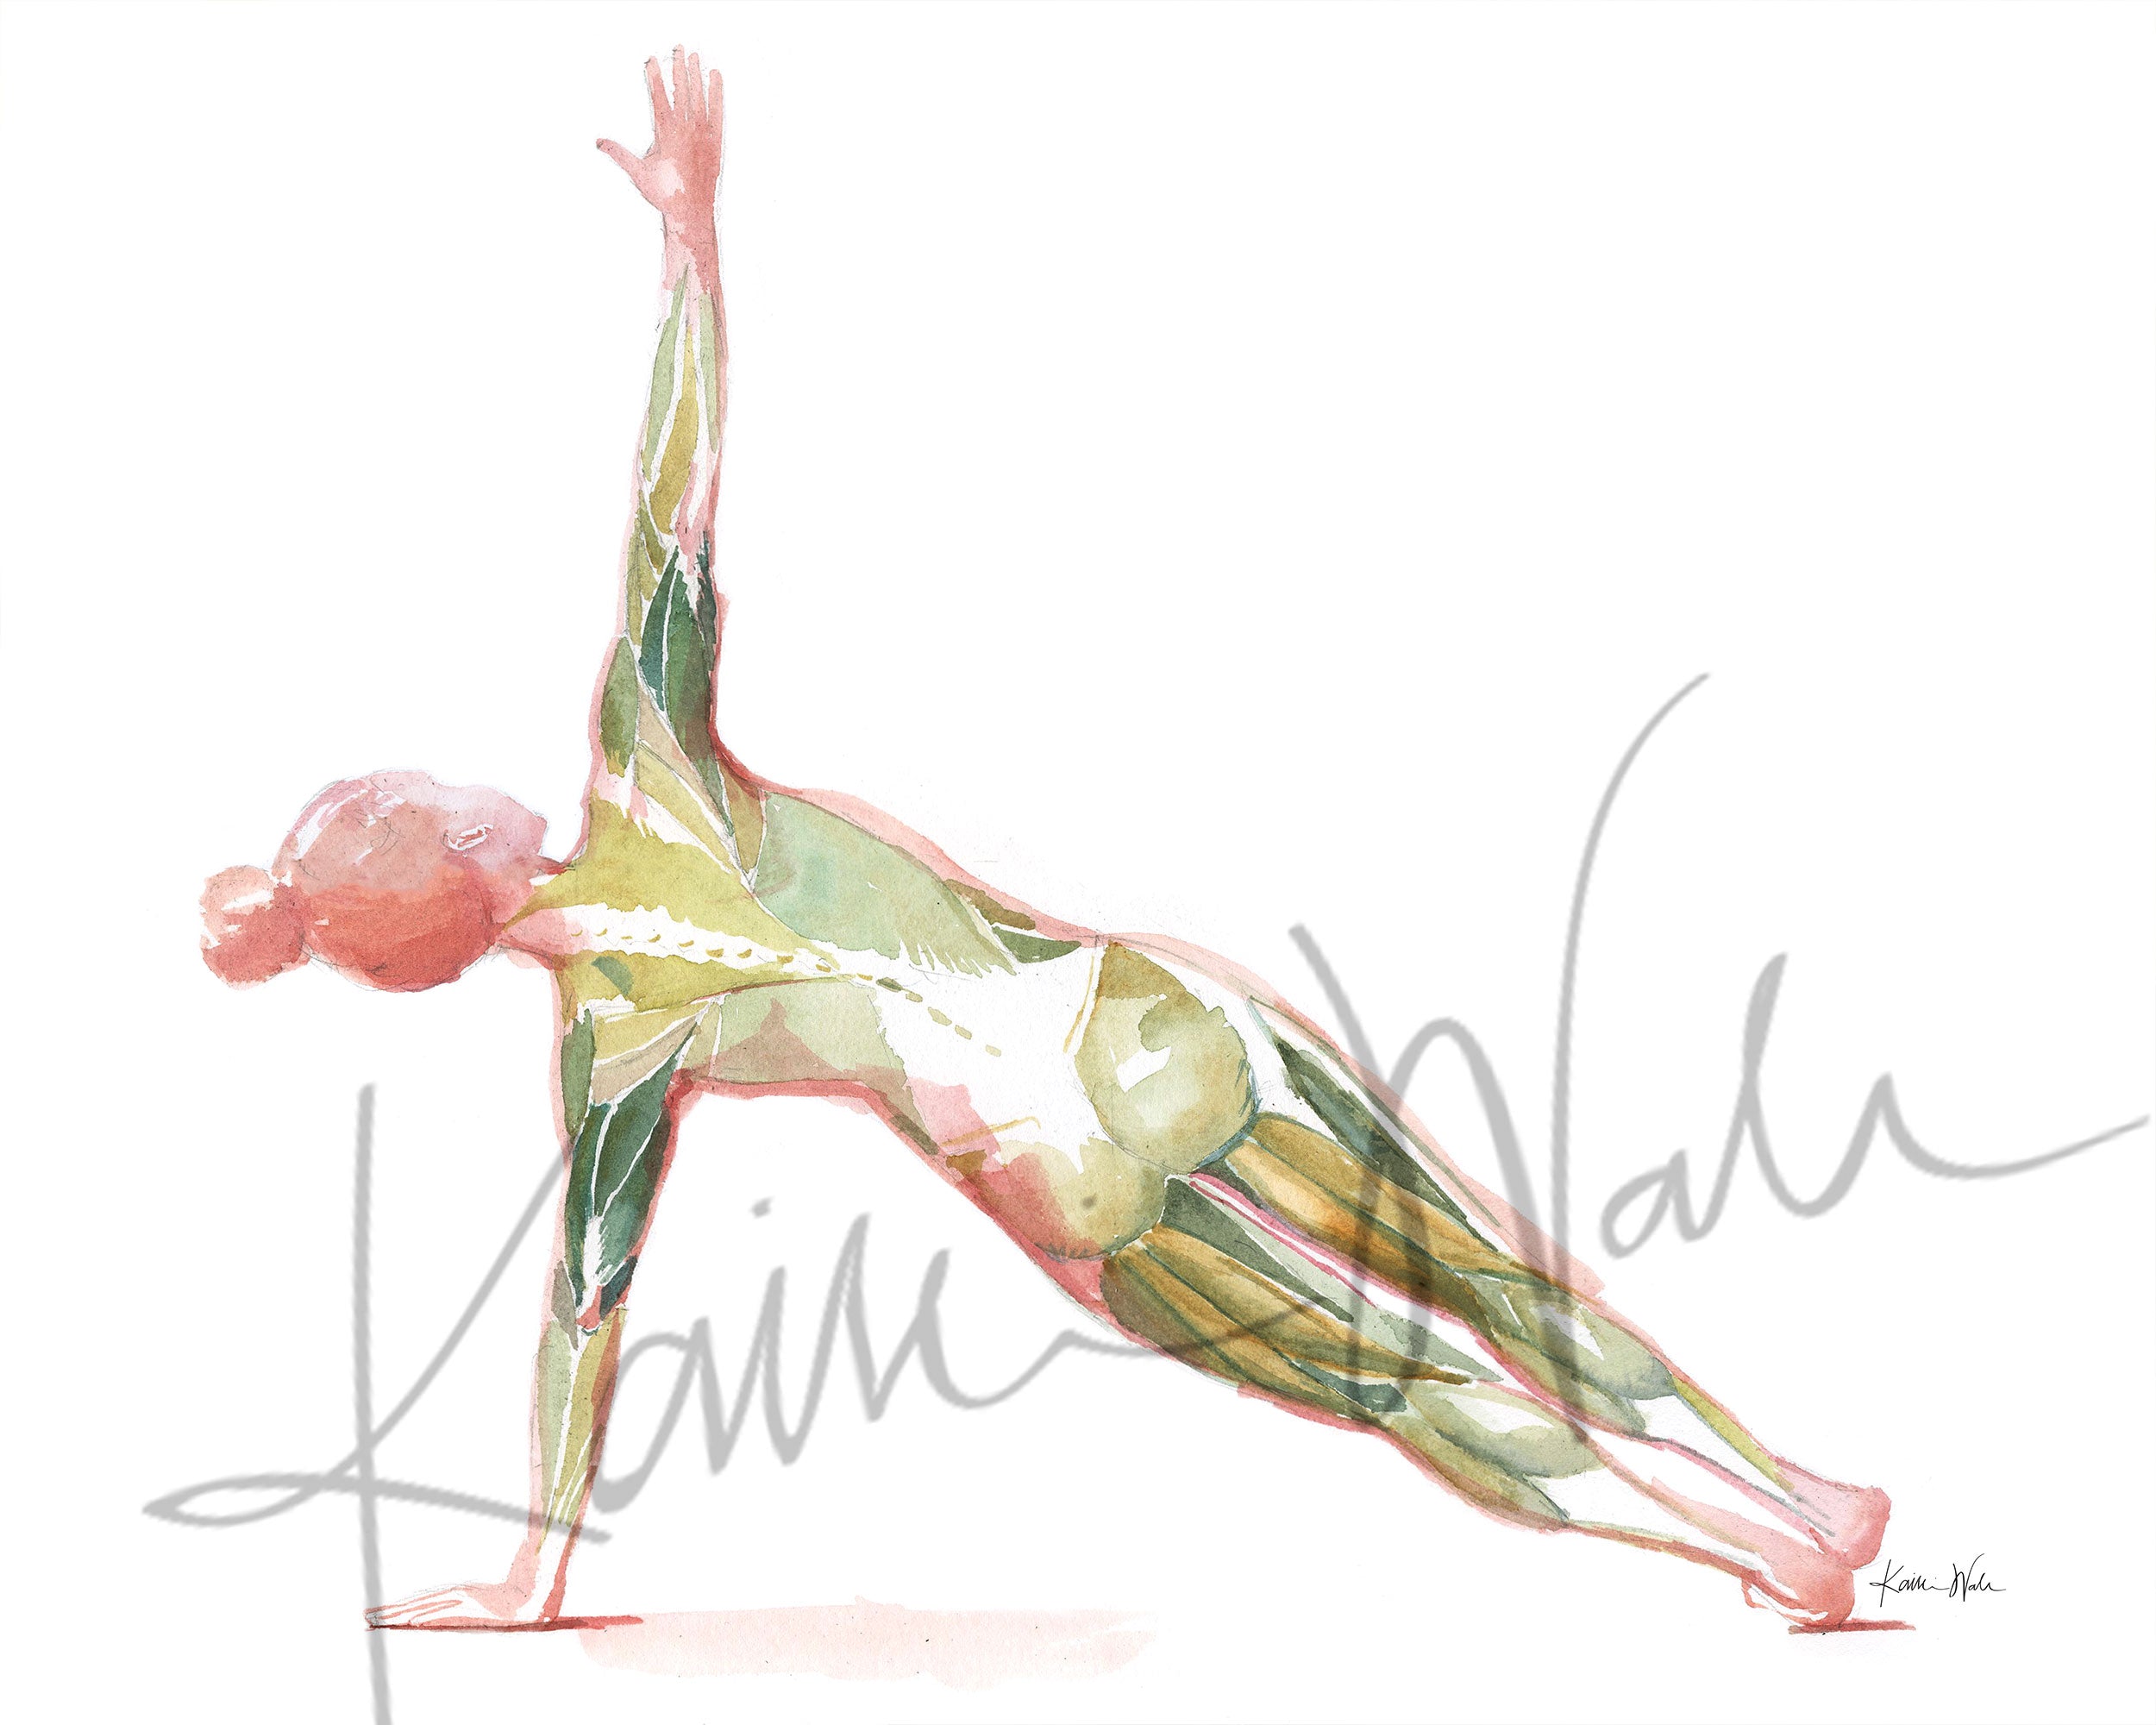 Yoga Pose in Line Art · Creative Fabrica